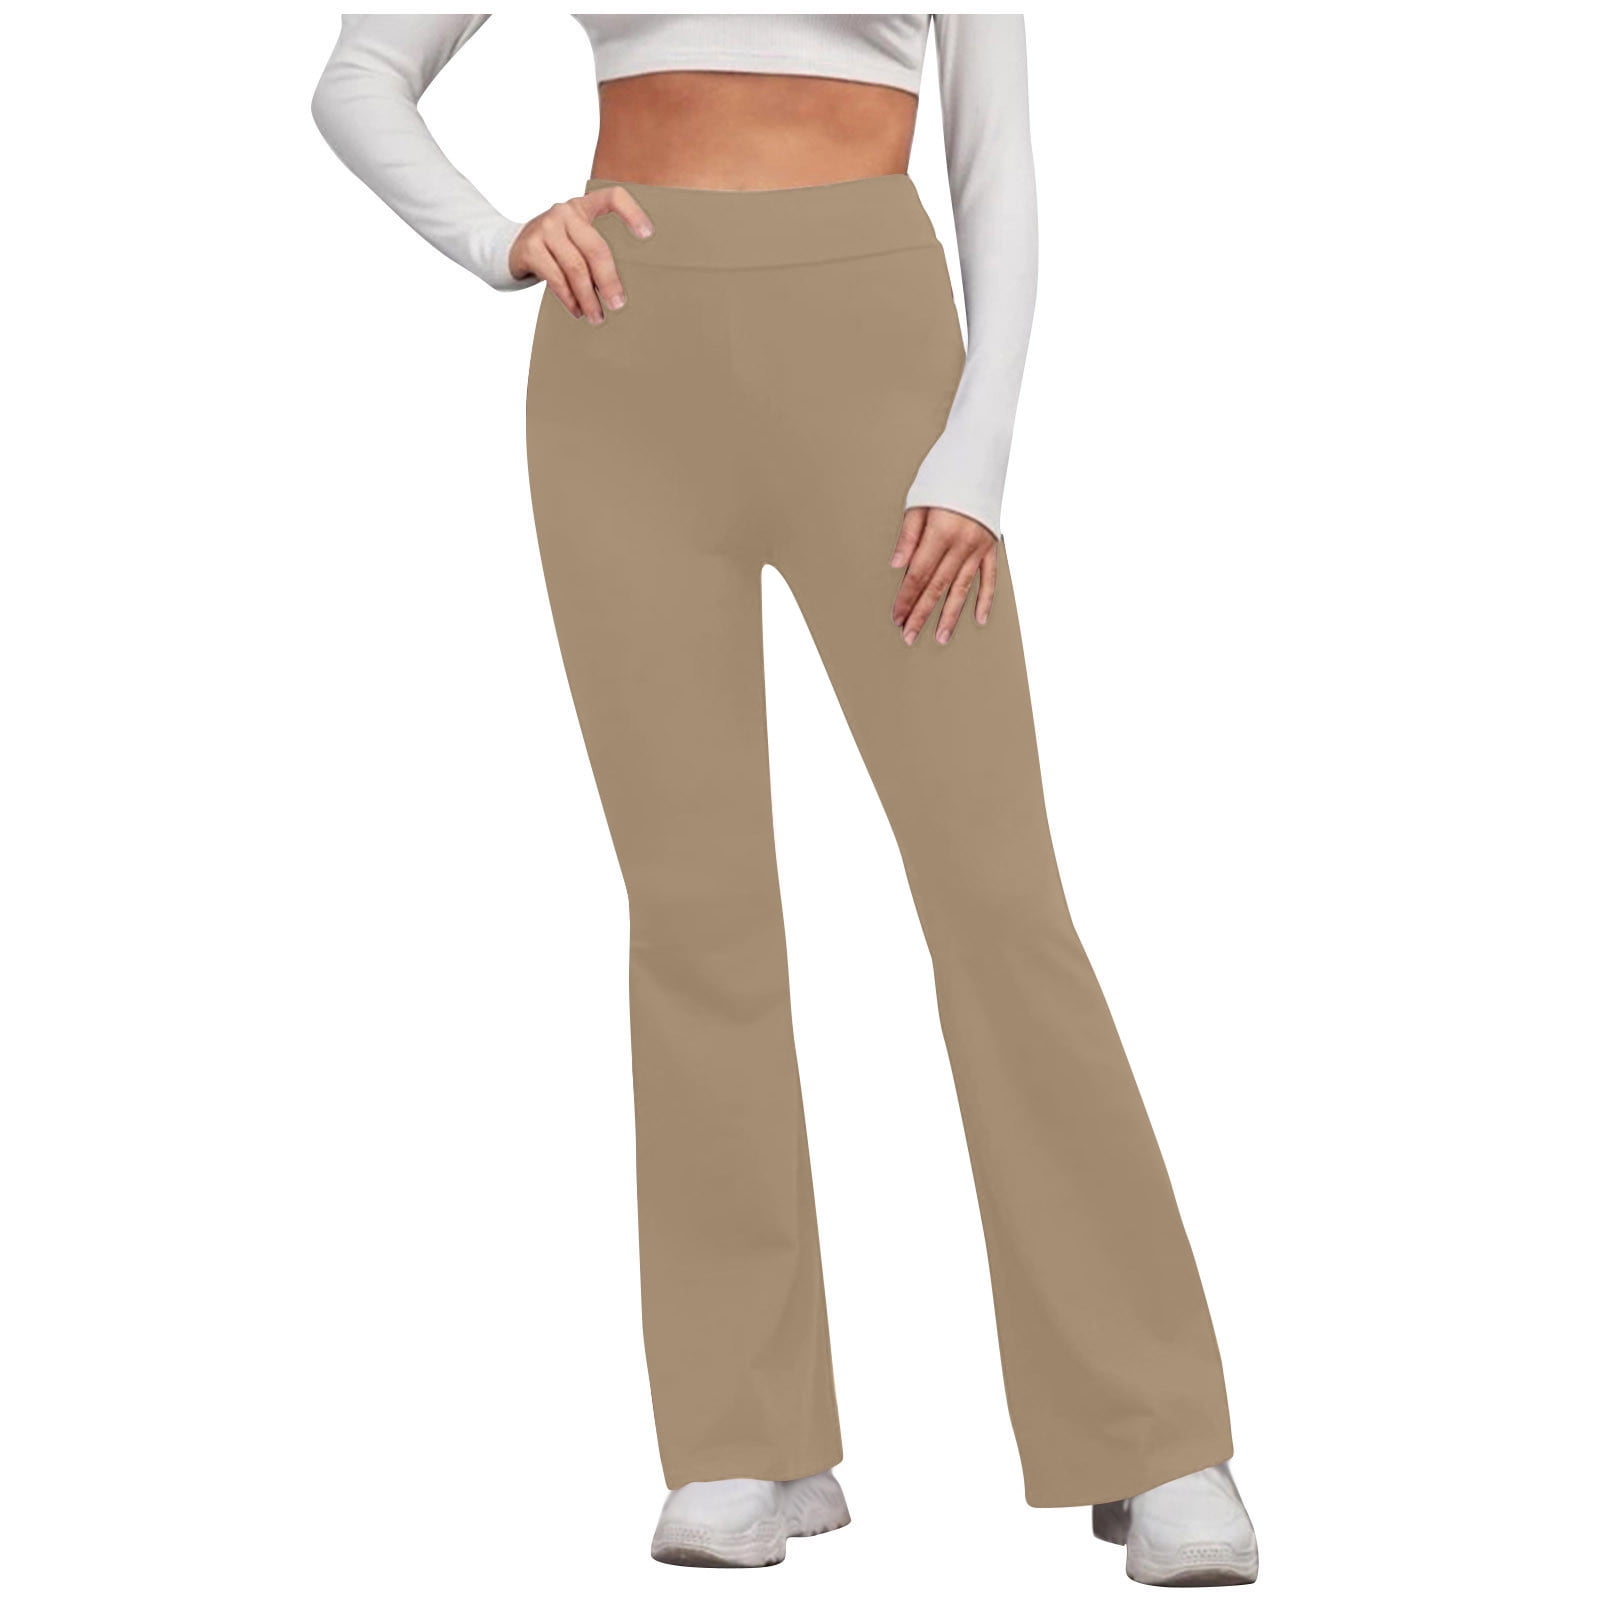 Penkiiy Yoga Pants Women's Casual Slim High Elastic Waist Solid